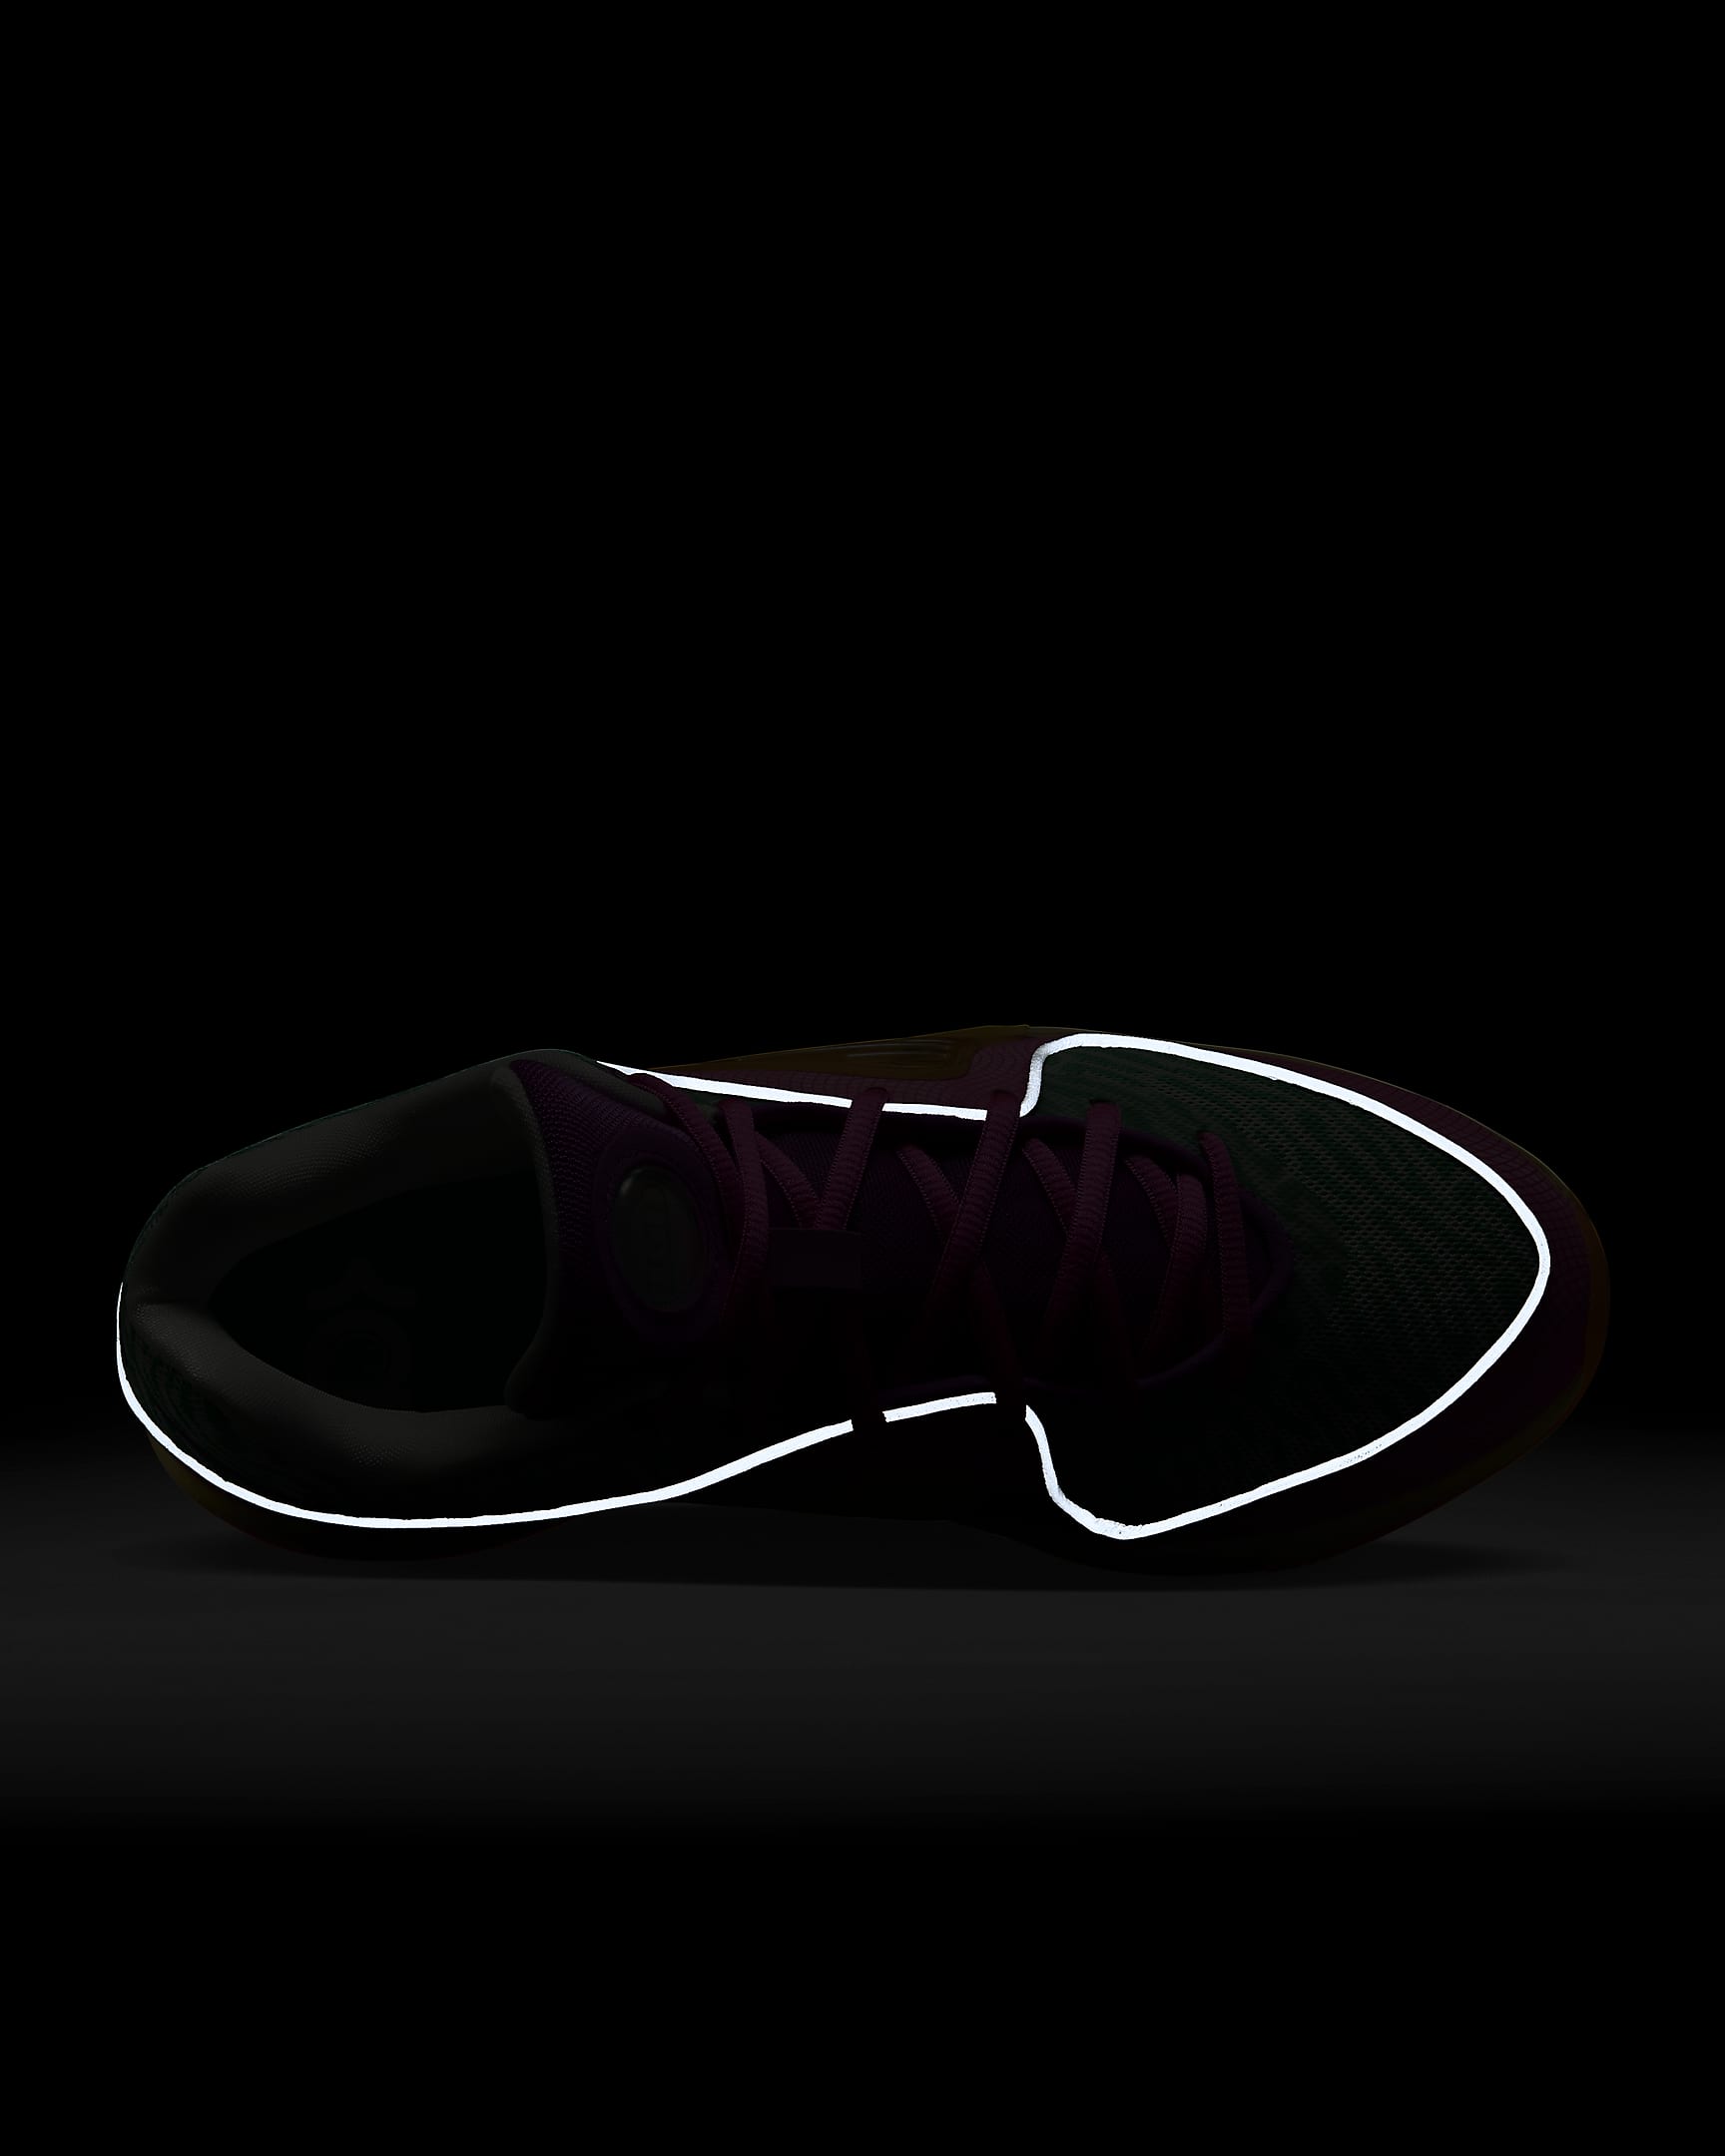 KD16 ASW Basketball Shoes. Nike.com